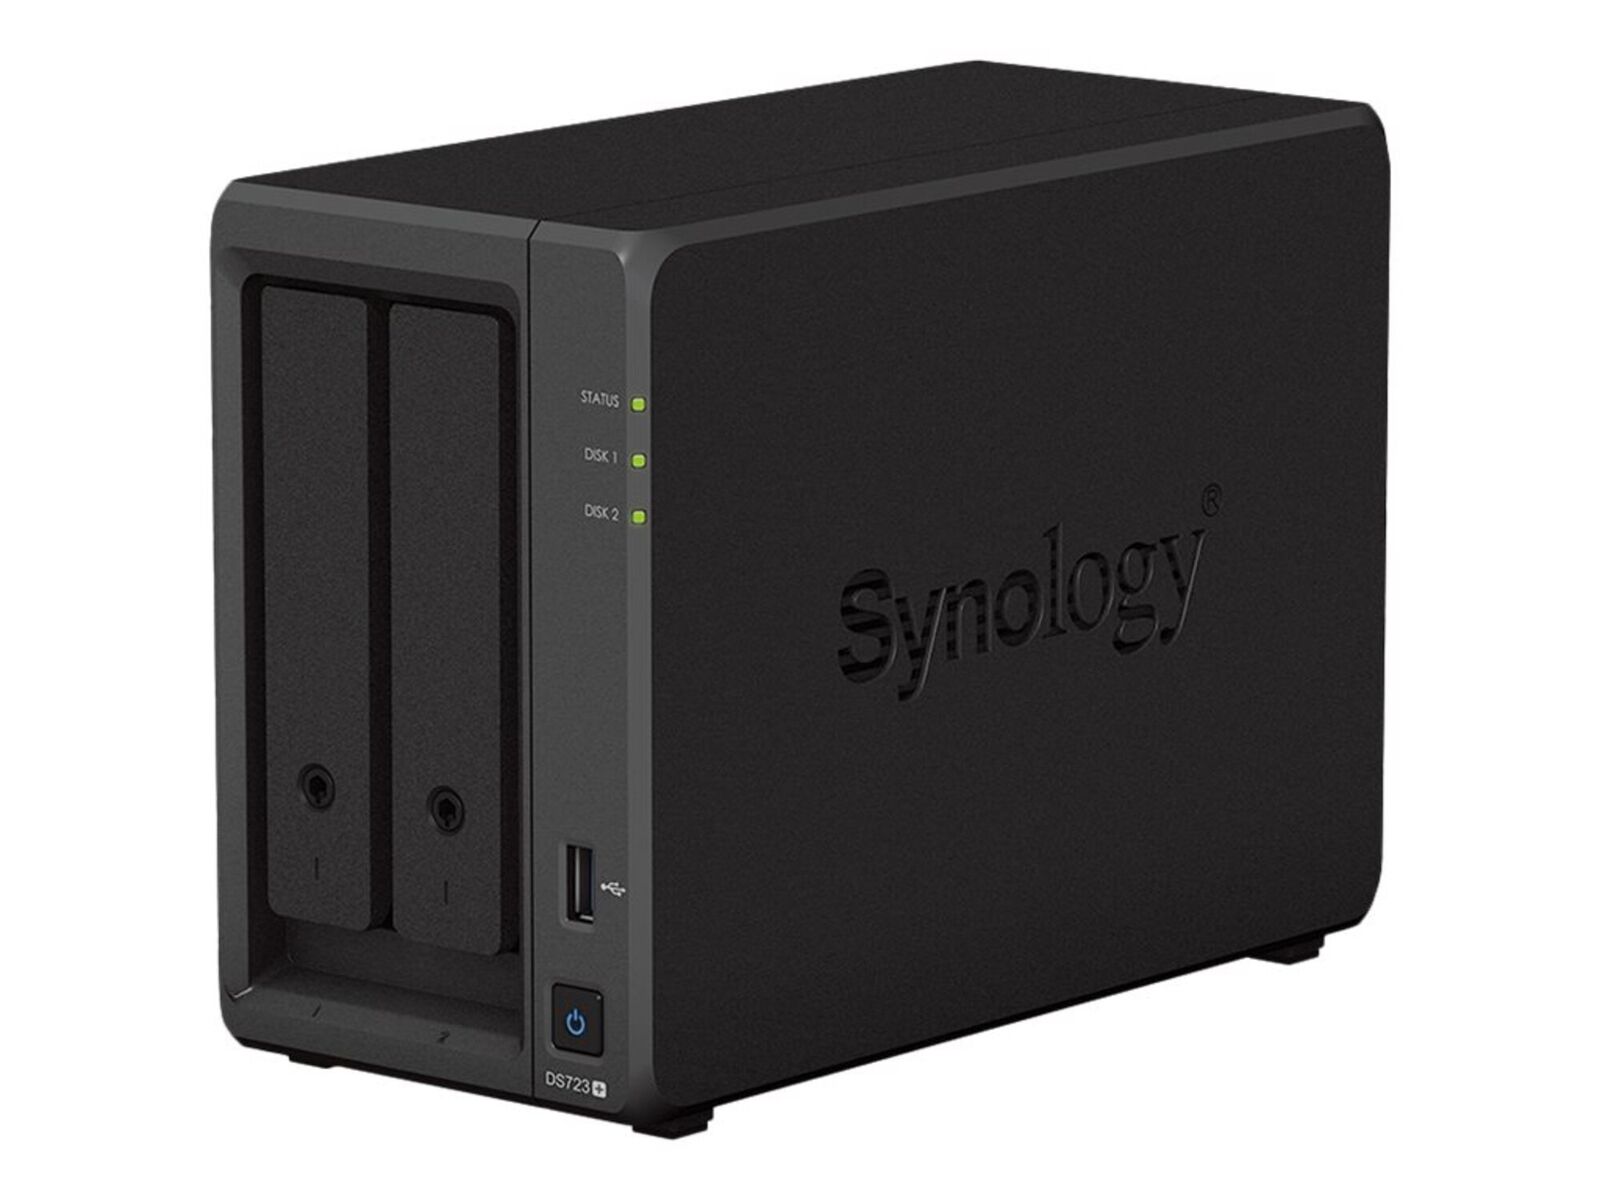 Synology - DS723+ - Synology DiskStation DS723+ SAN/NAS Storage System - AMD